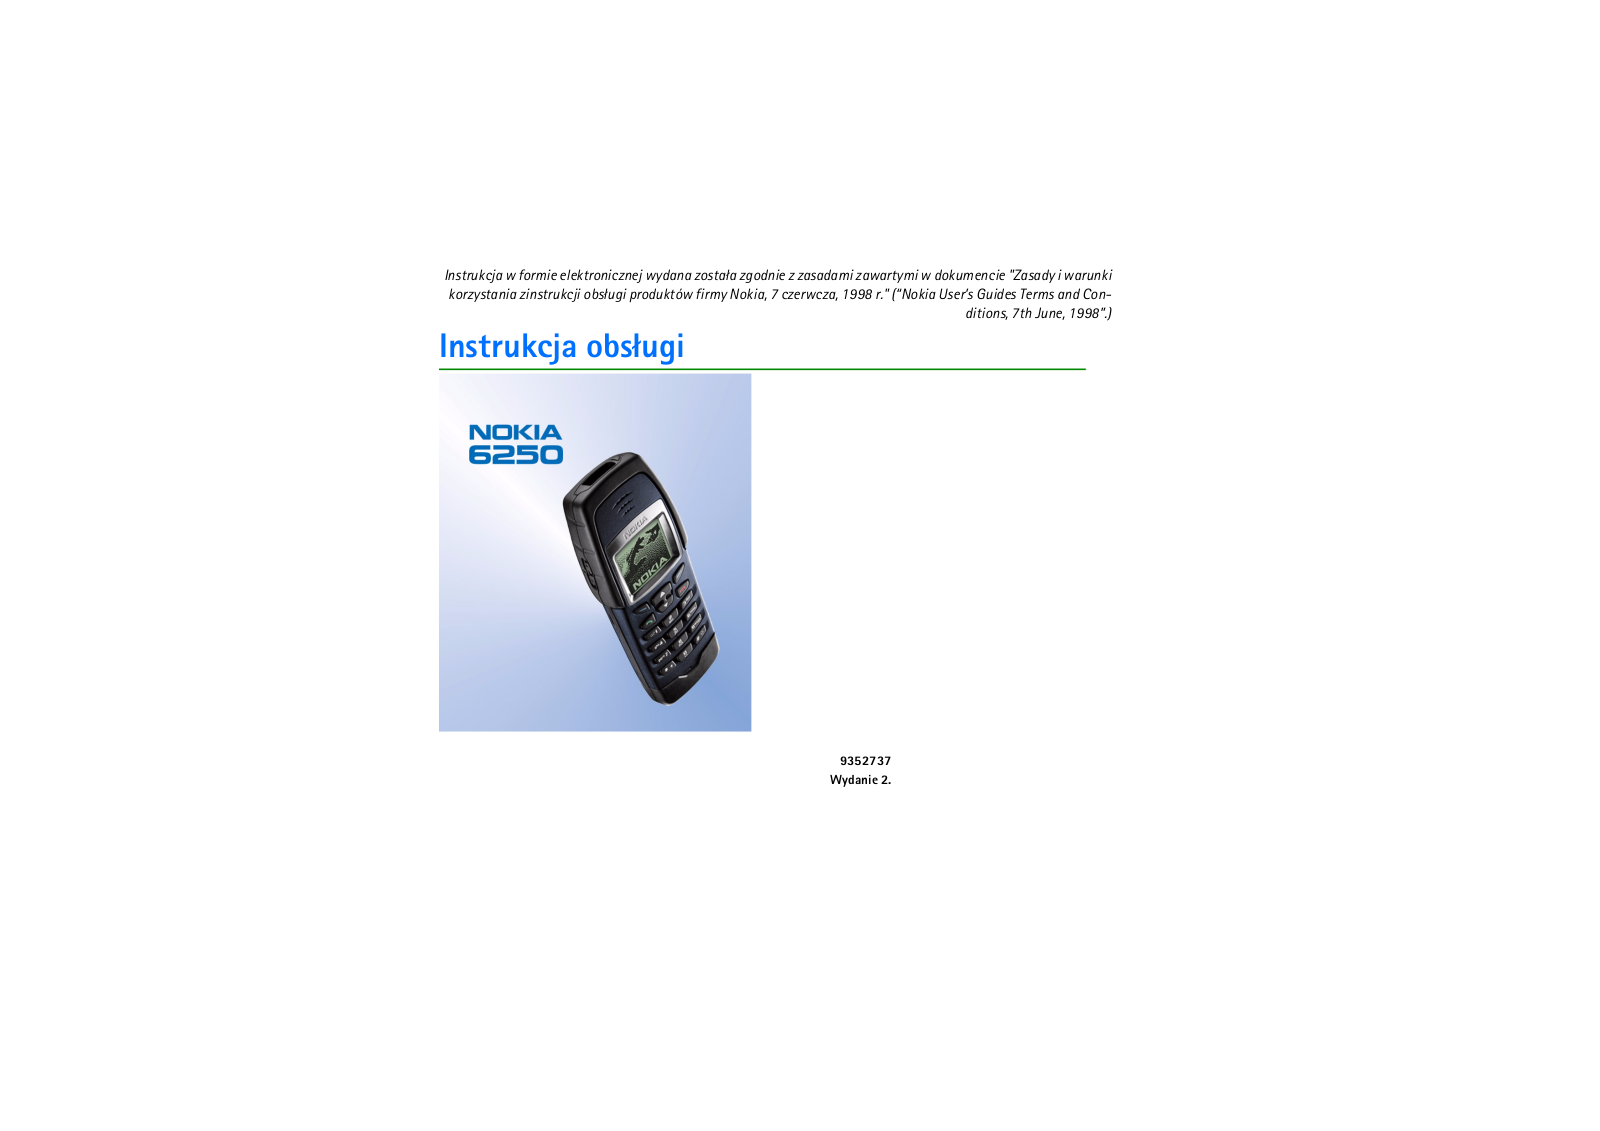 Nokia 6250 User Manual